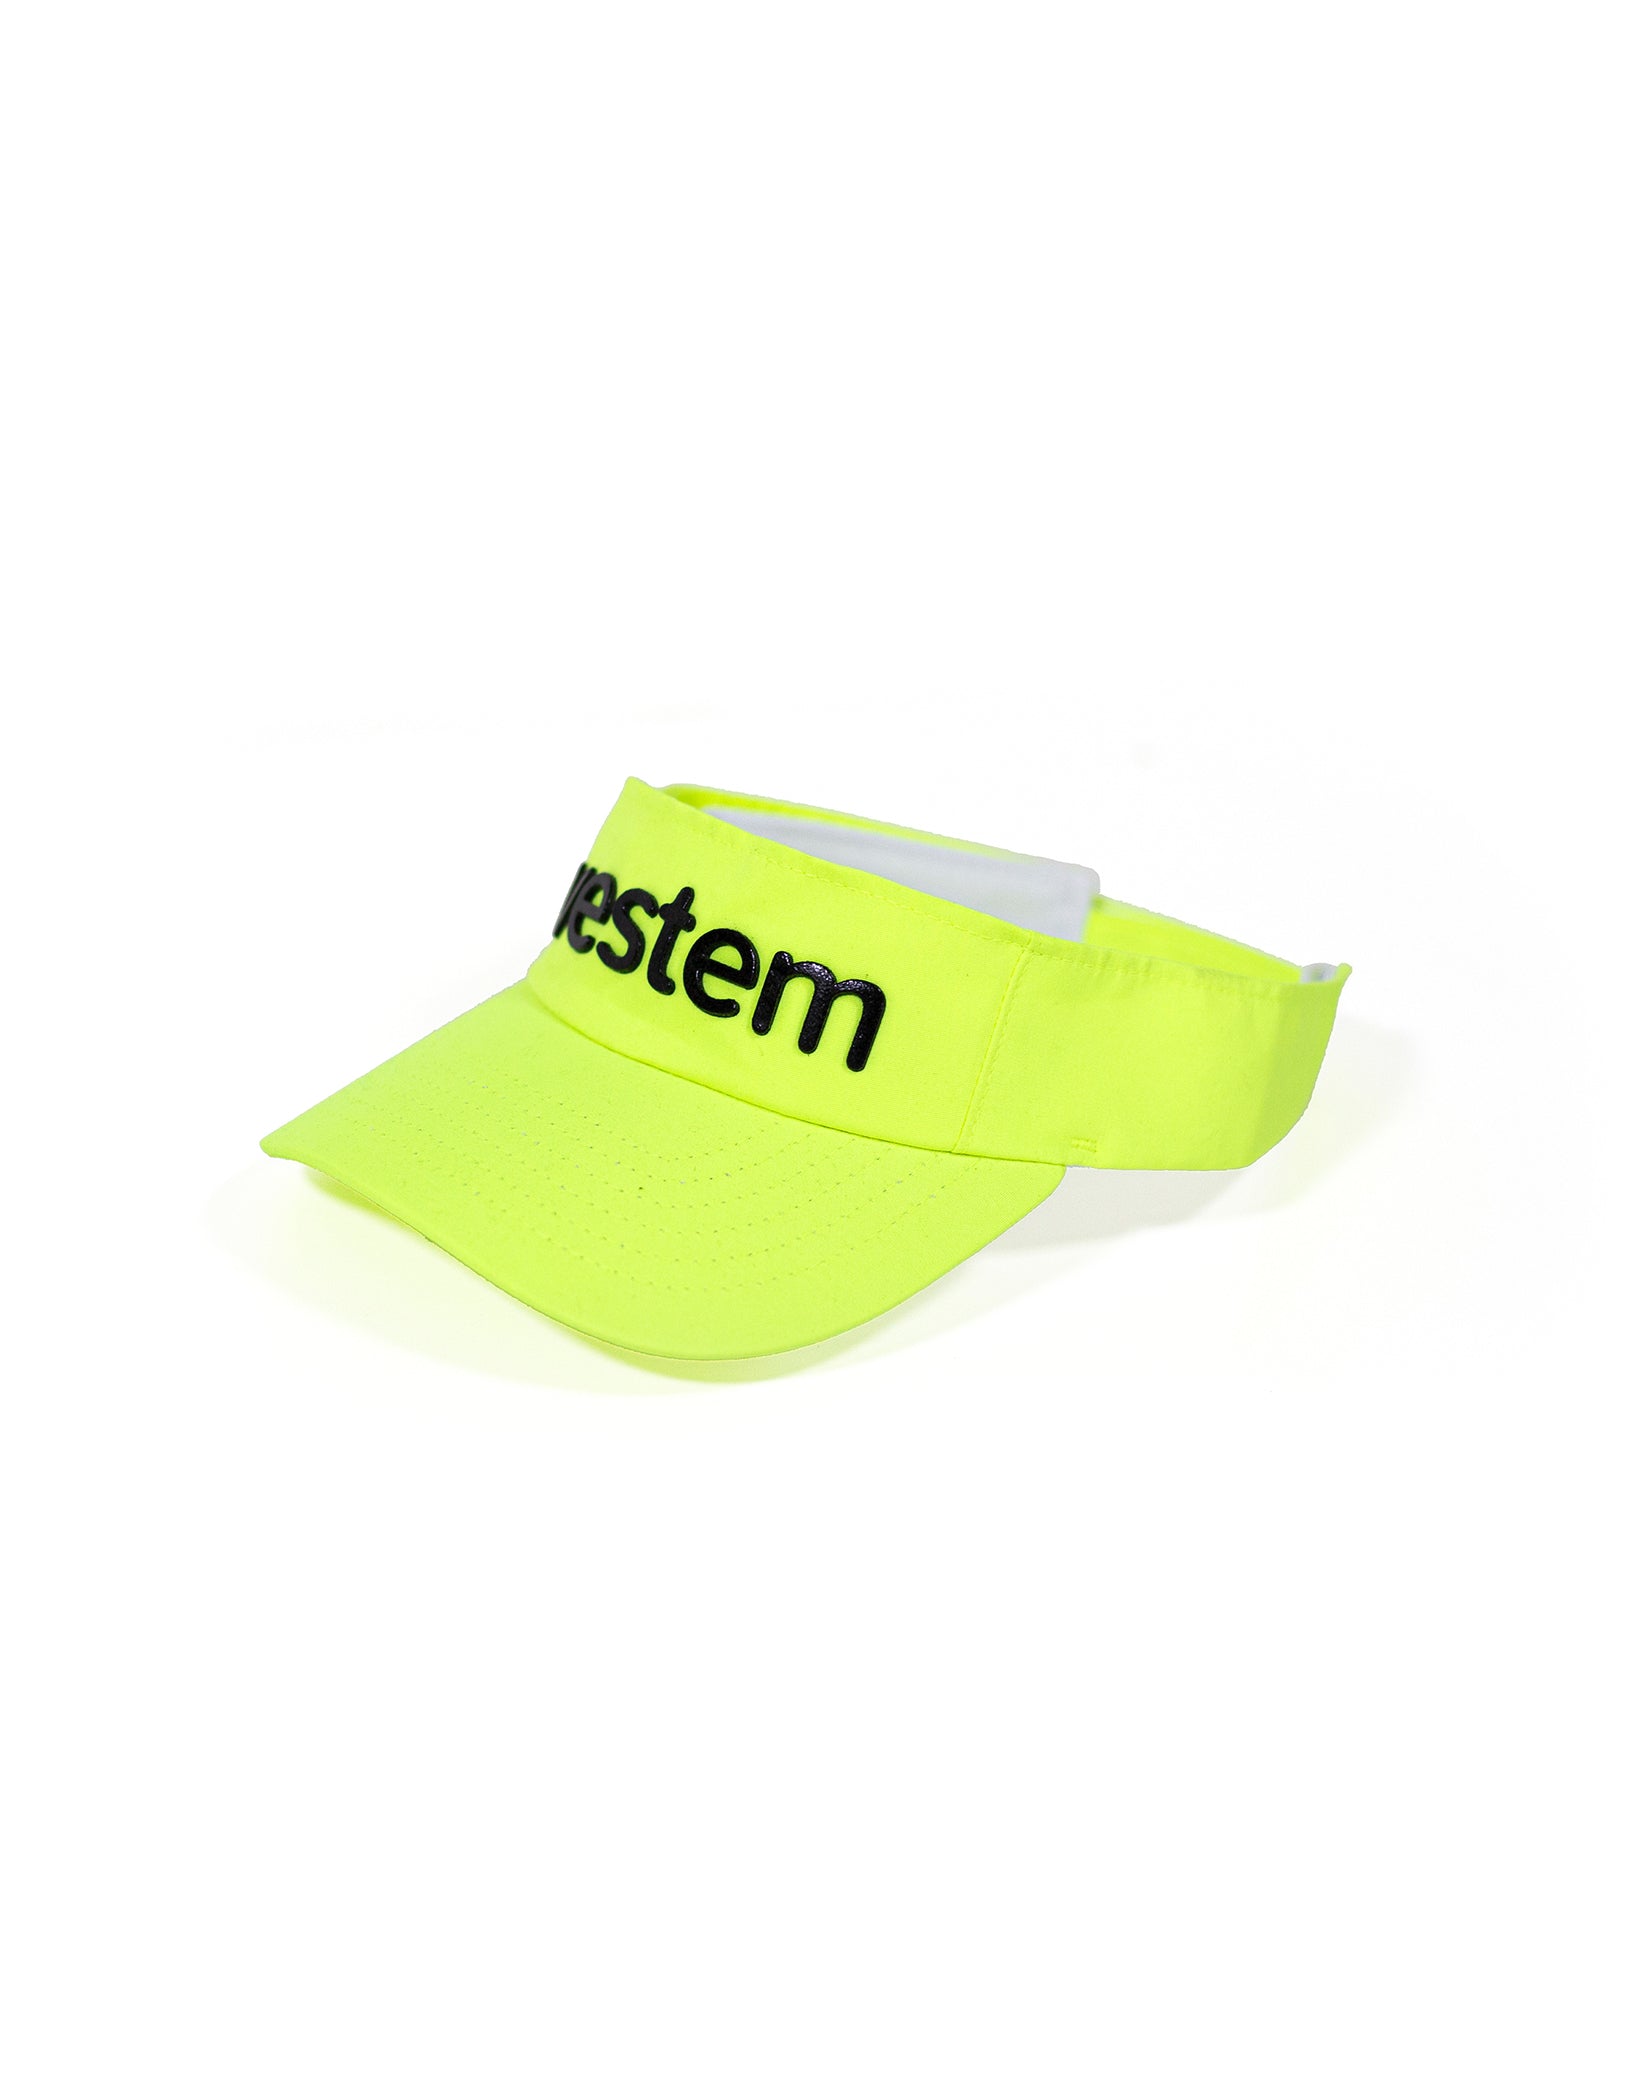 Vestem - Visor Wear Neon Yellow - VS18C0009